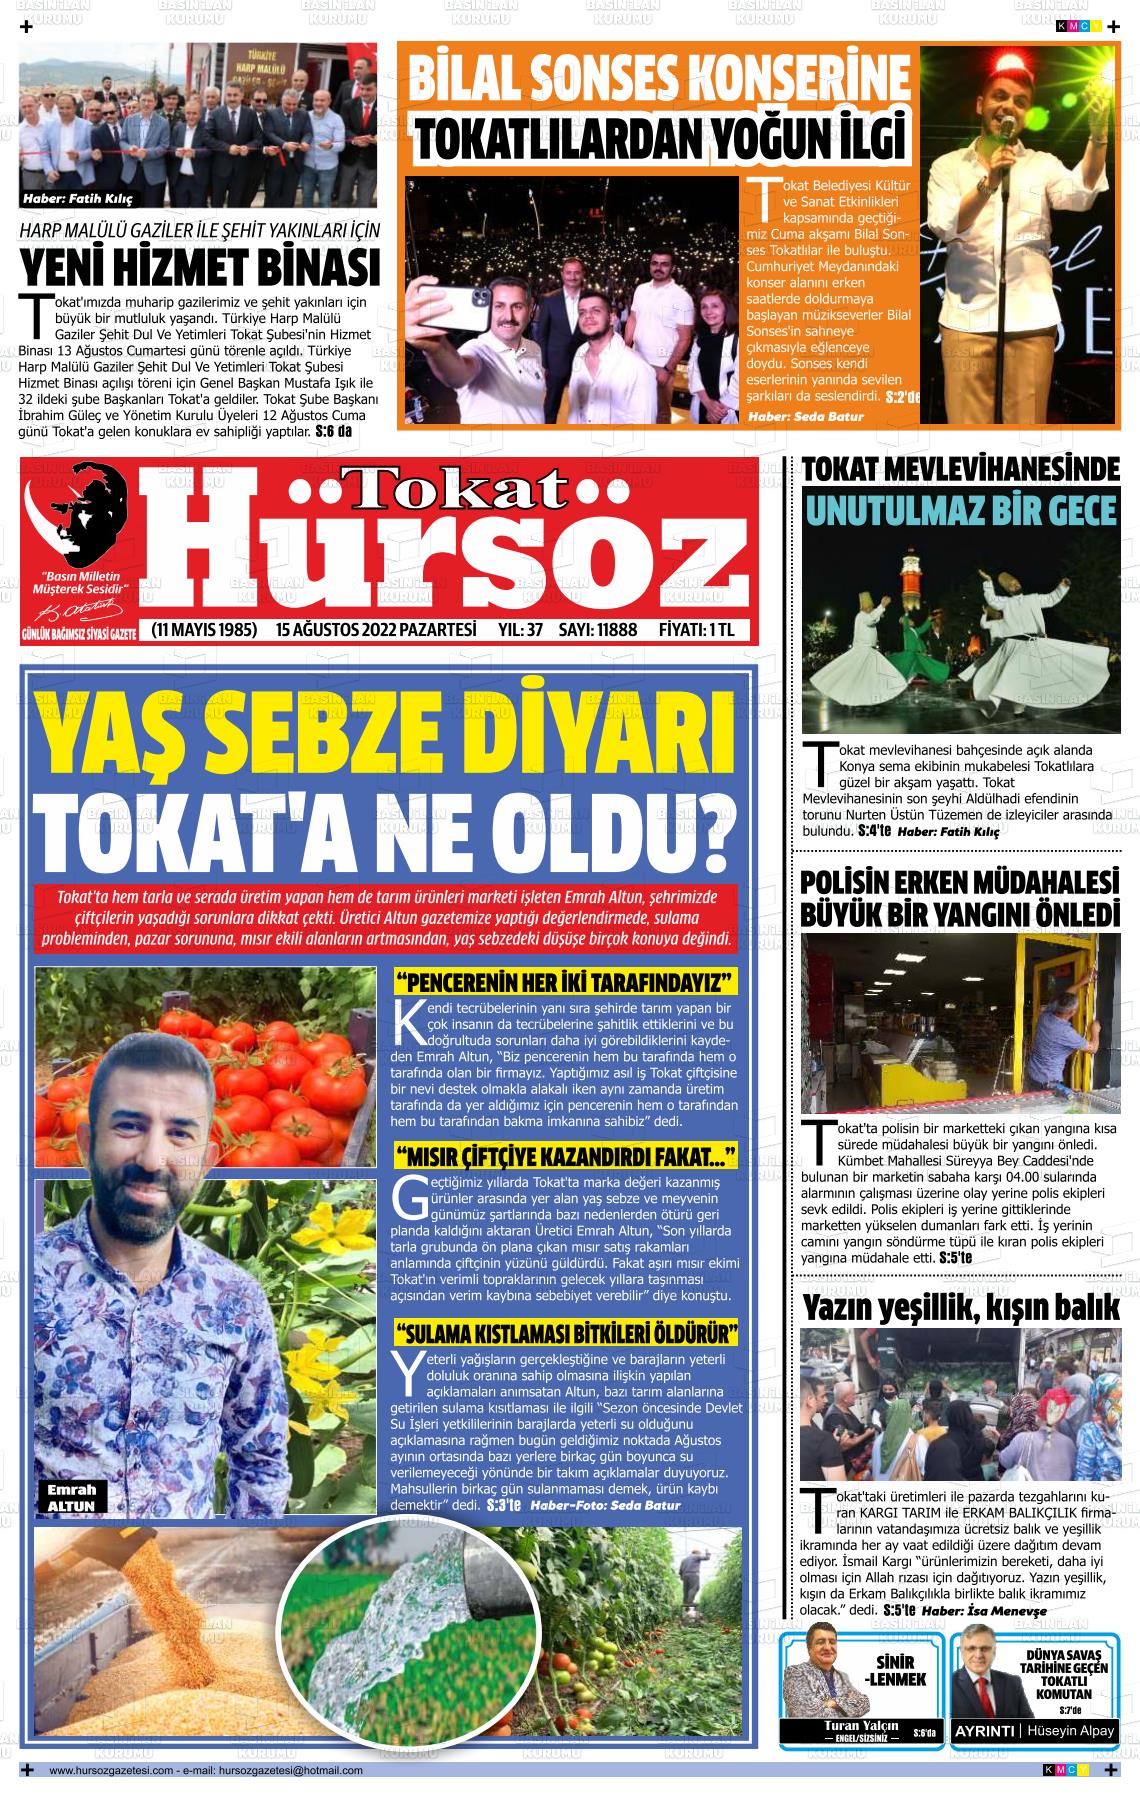 15 Ağustos 2022 Hürsöz Gazete Manşeti